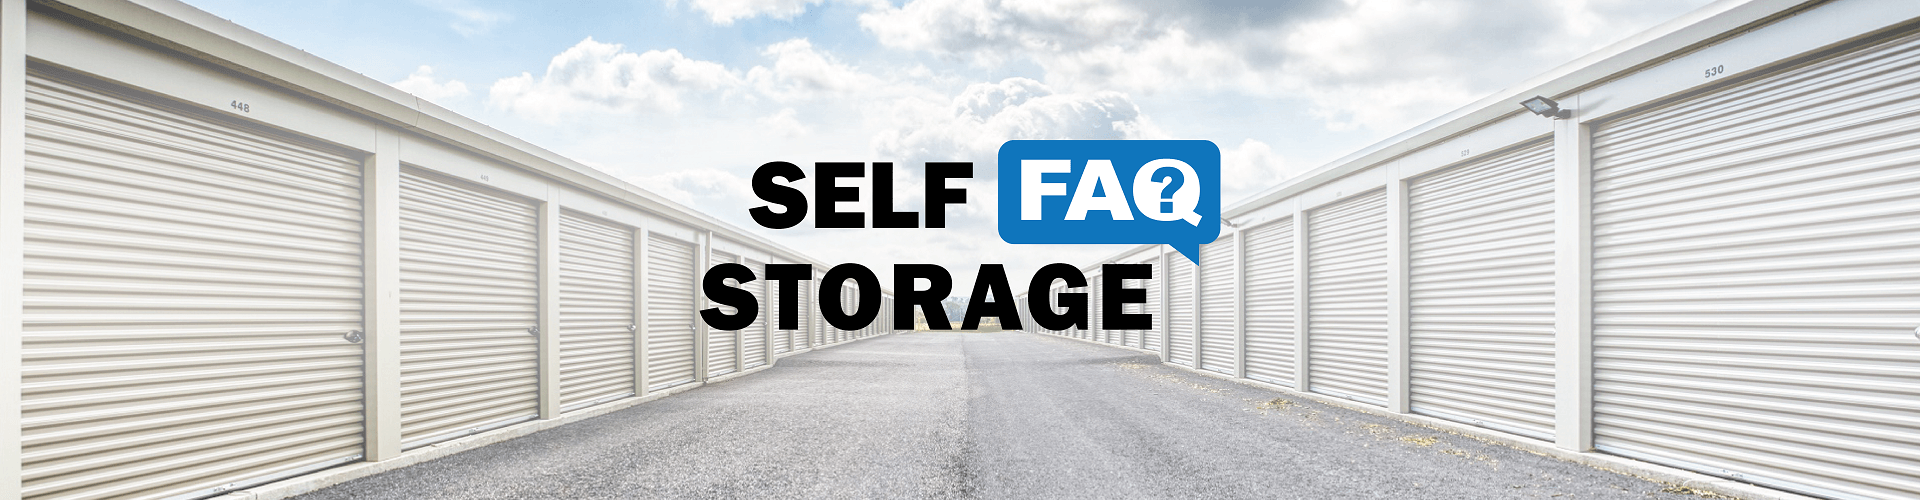 Self Storage FAQ header image